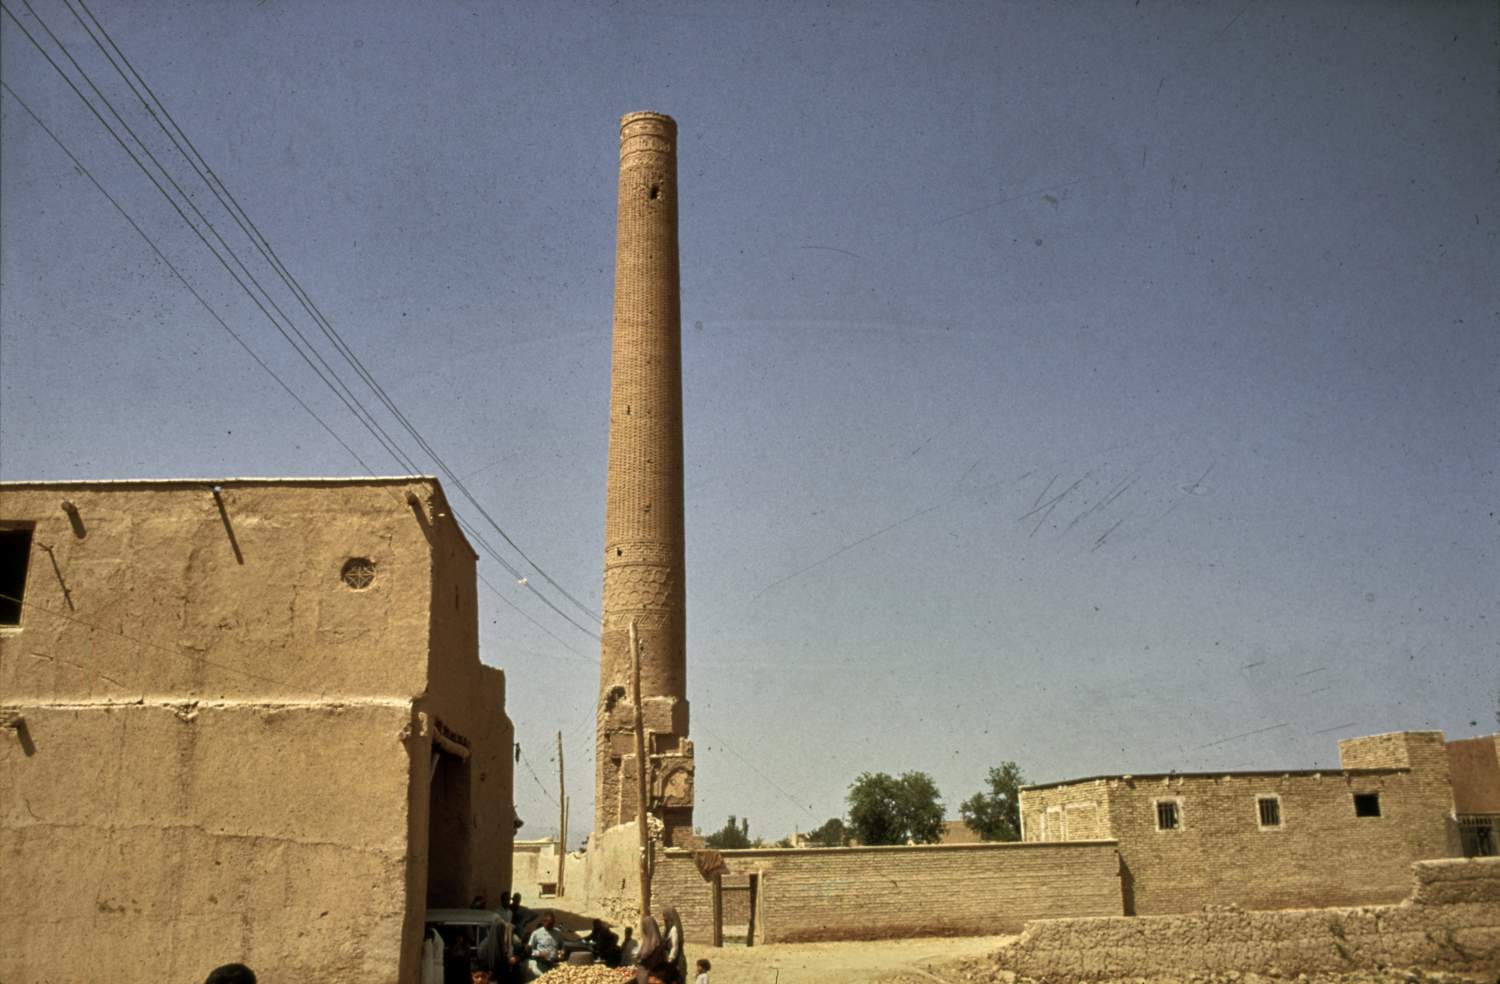 Manar-i Chihil Dukhtaran - General view of minaret from surrounding neighborhood.